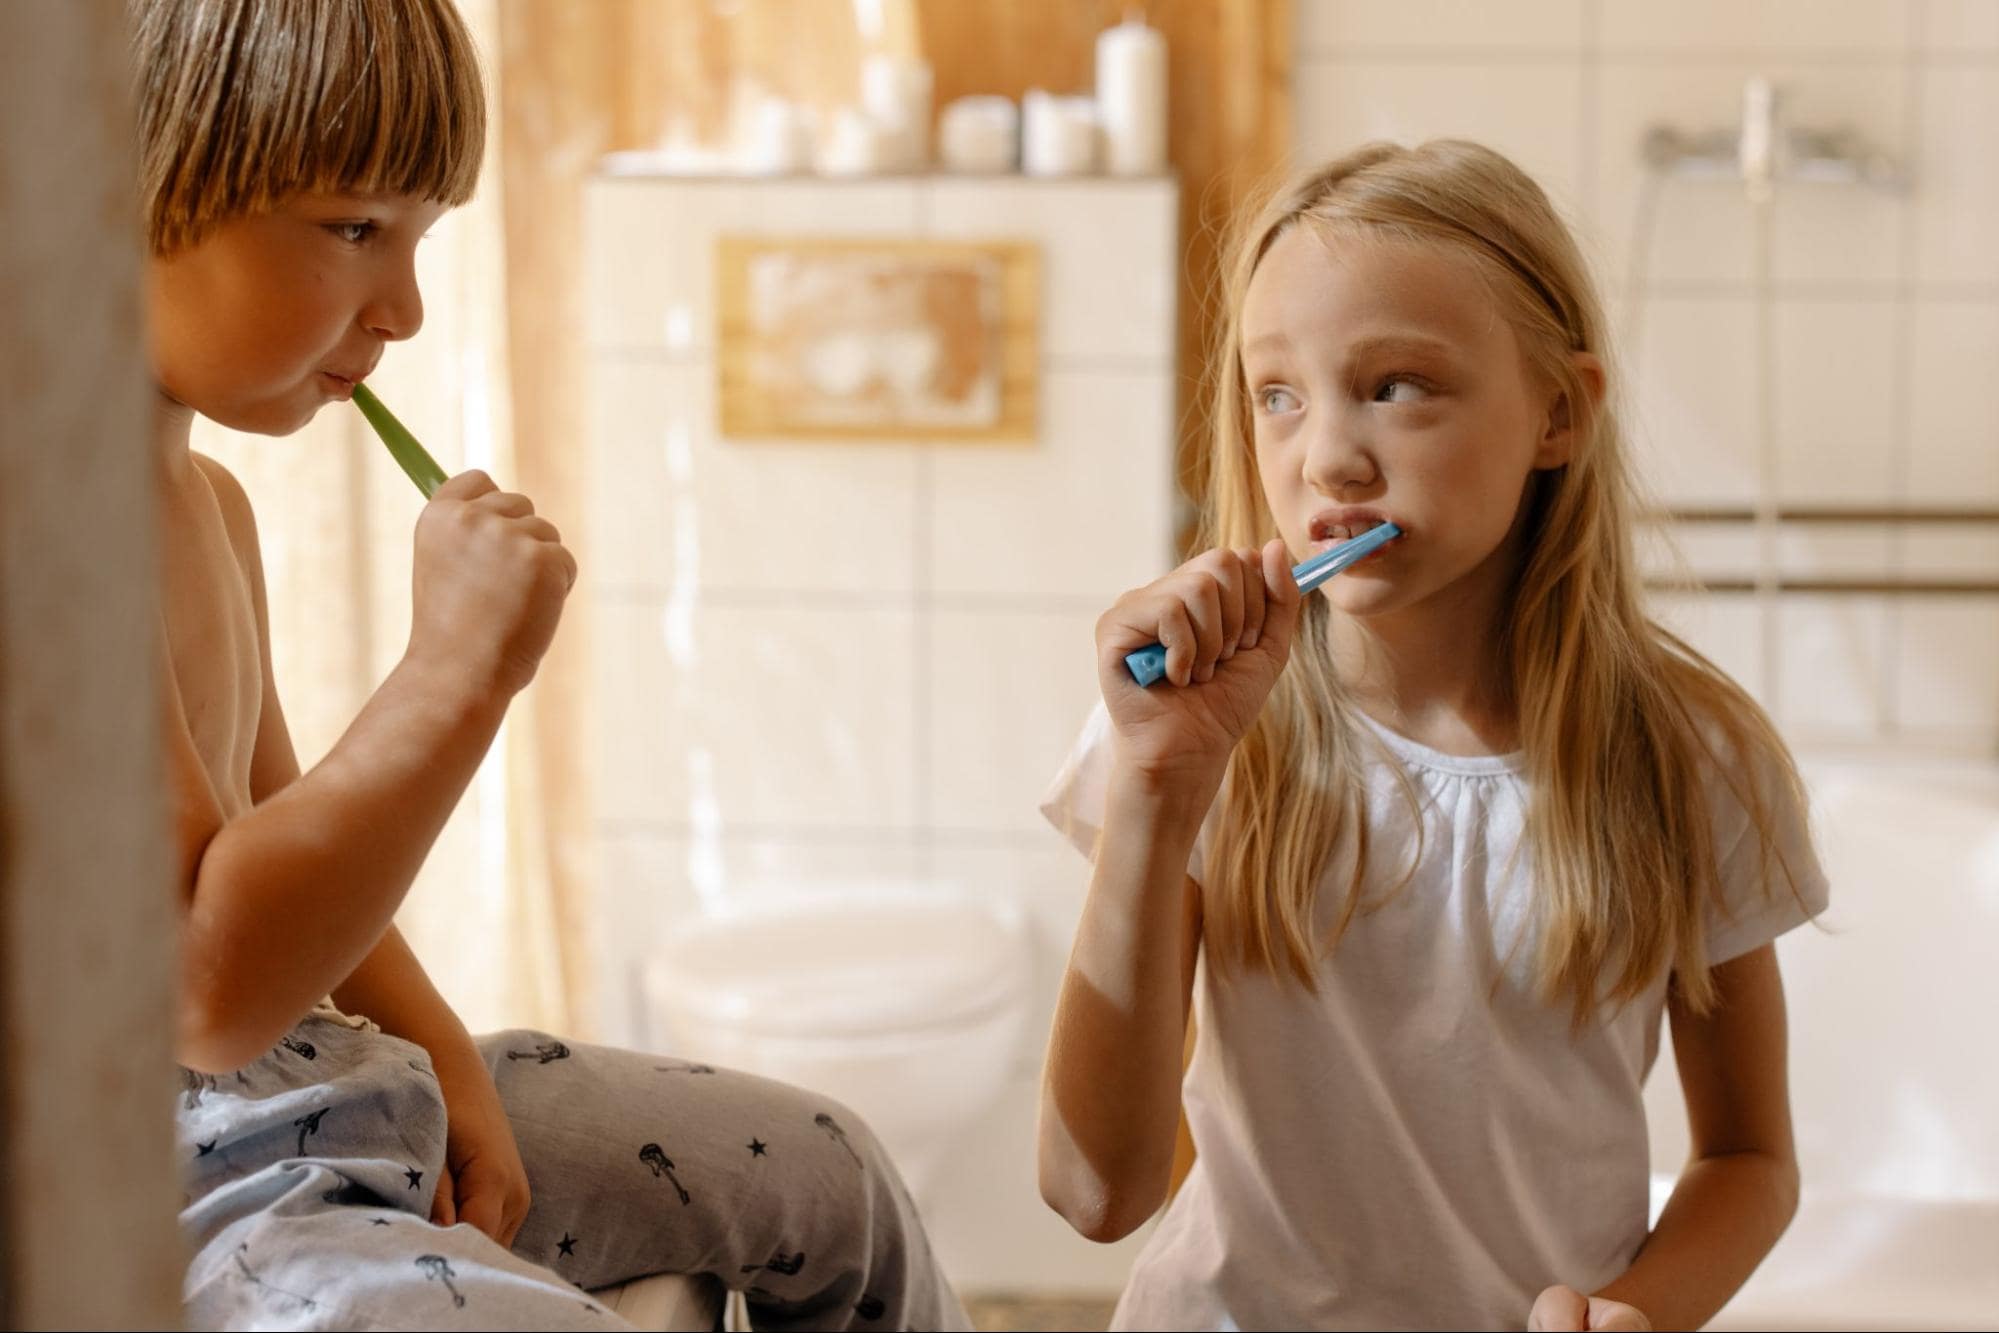 Image of children brushing their teeth